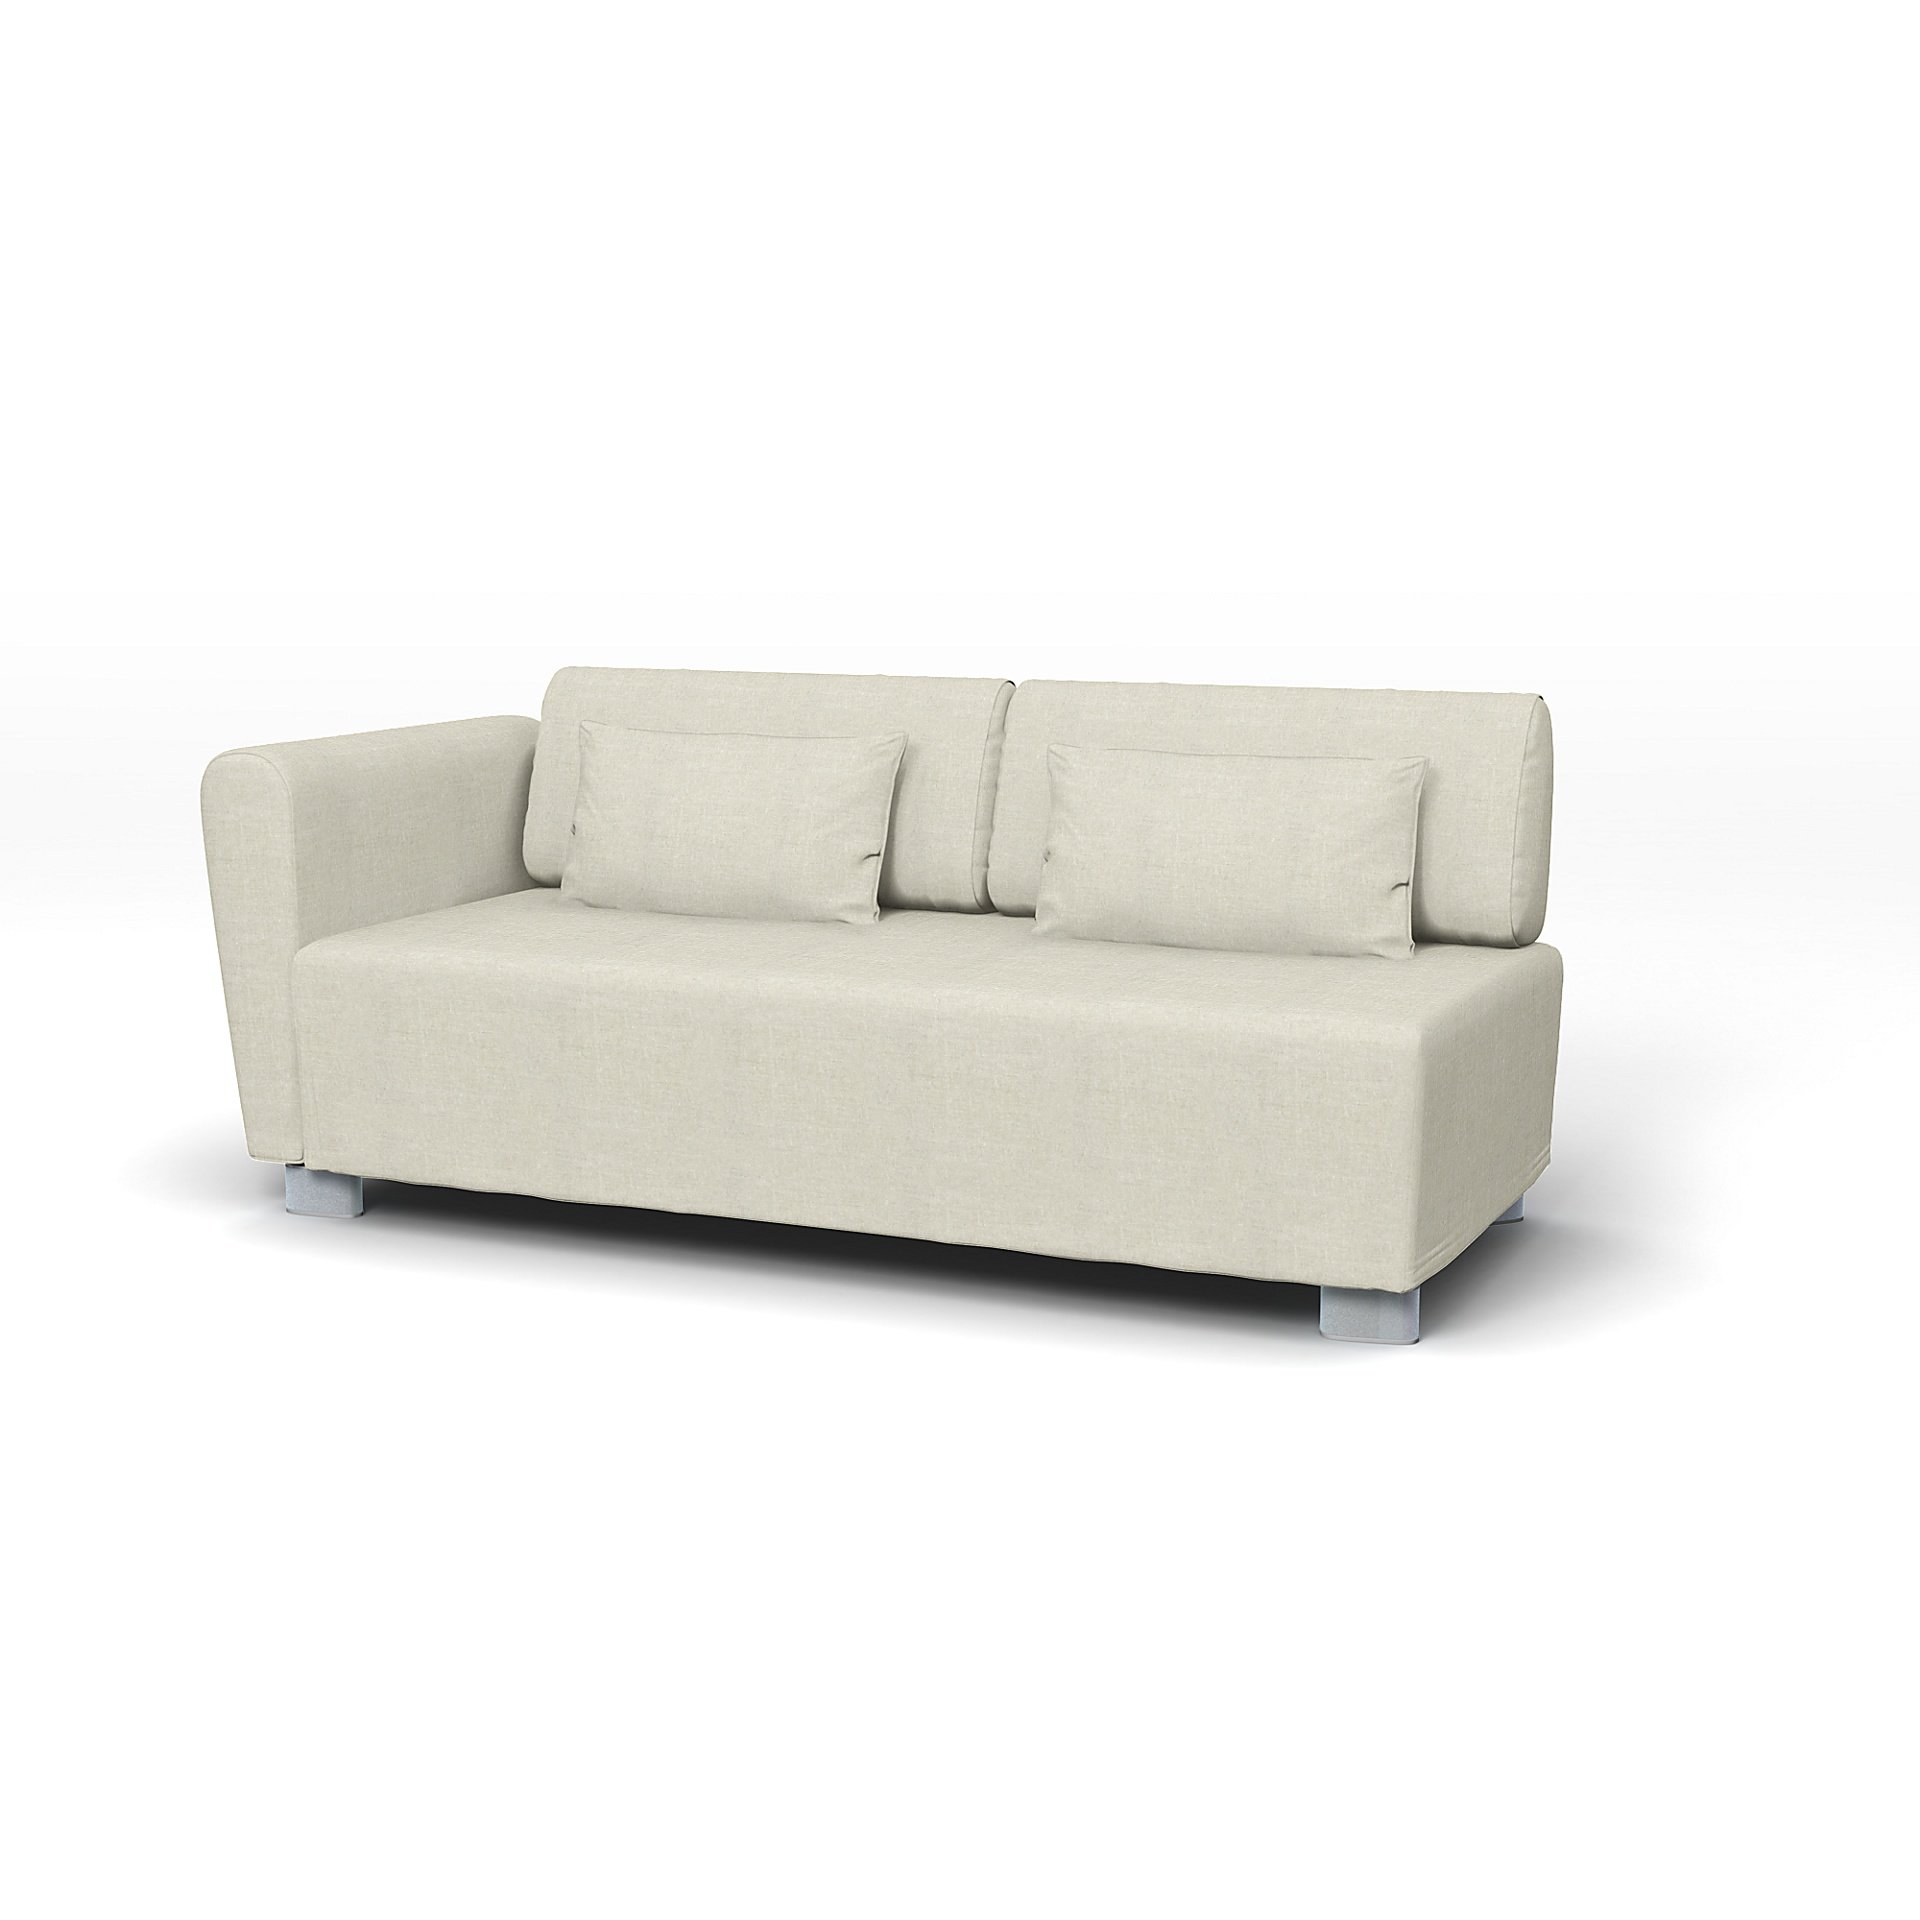 IKEA - Mysinge 2 Seater Sofa with Armrest Cover, Natural, Linen - Bemz